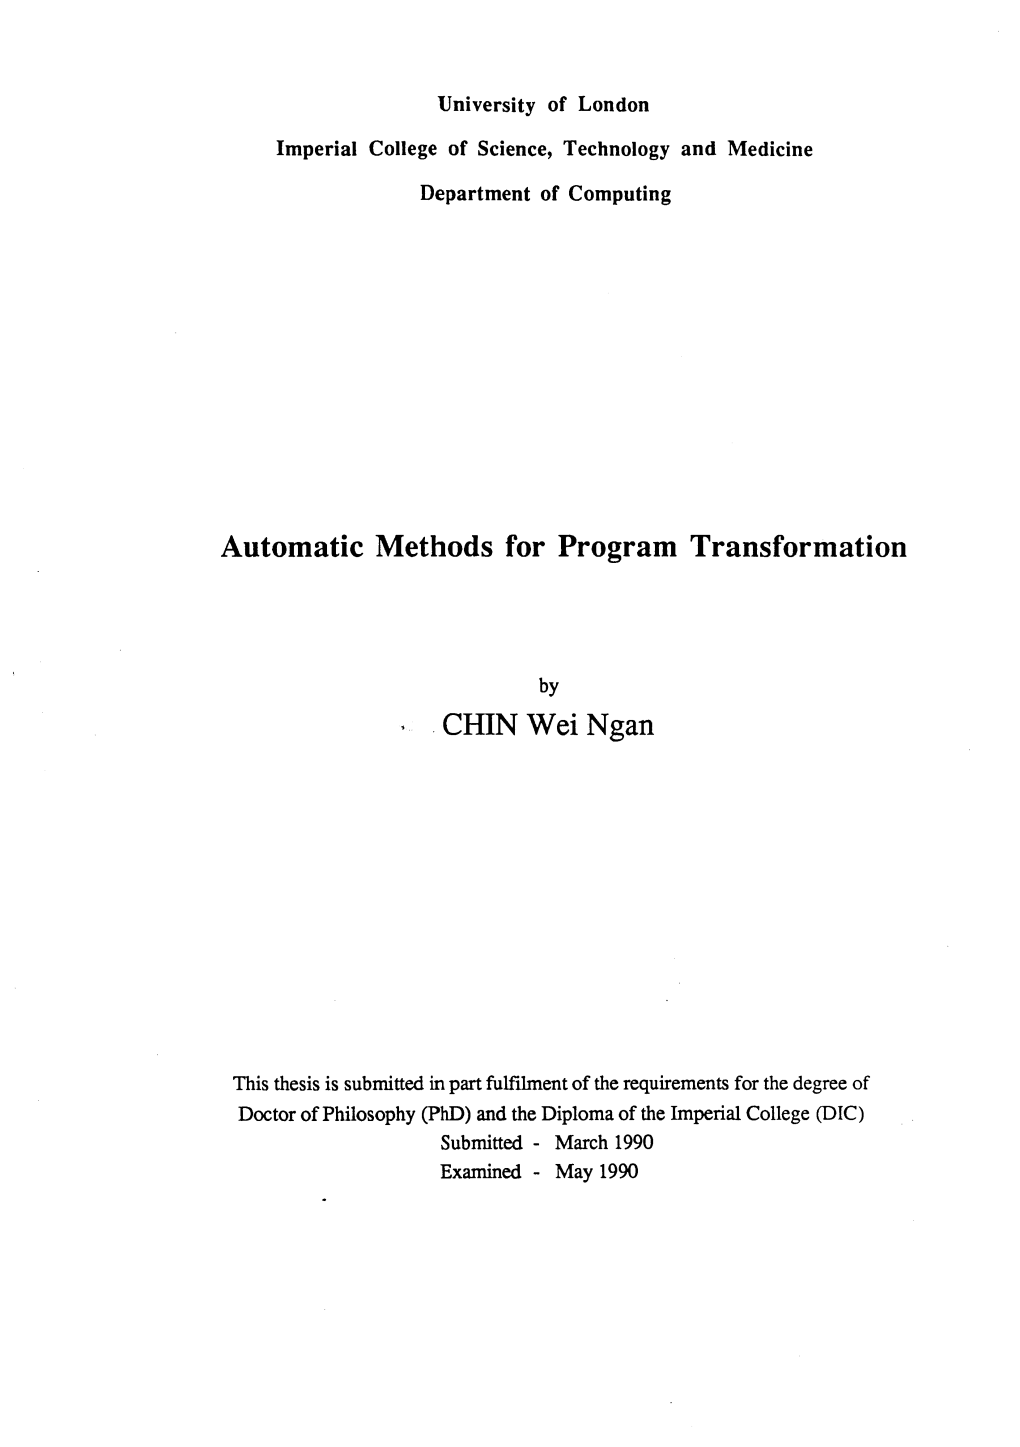 Automatic Methods for Program Transformation